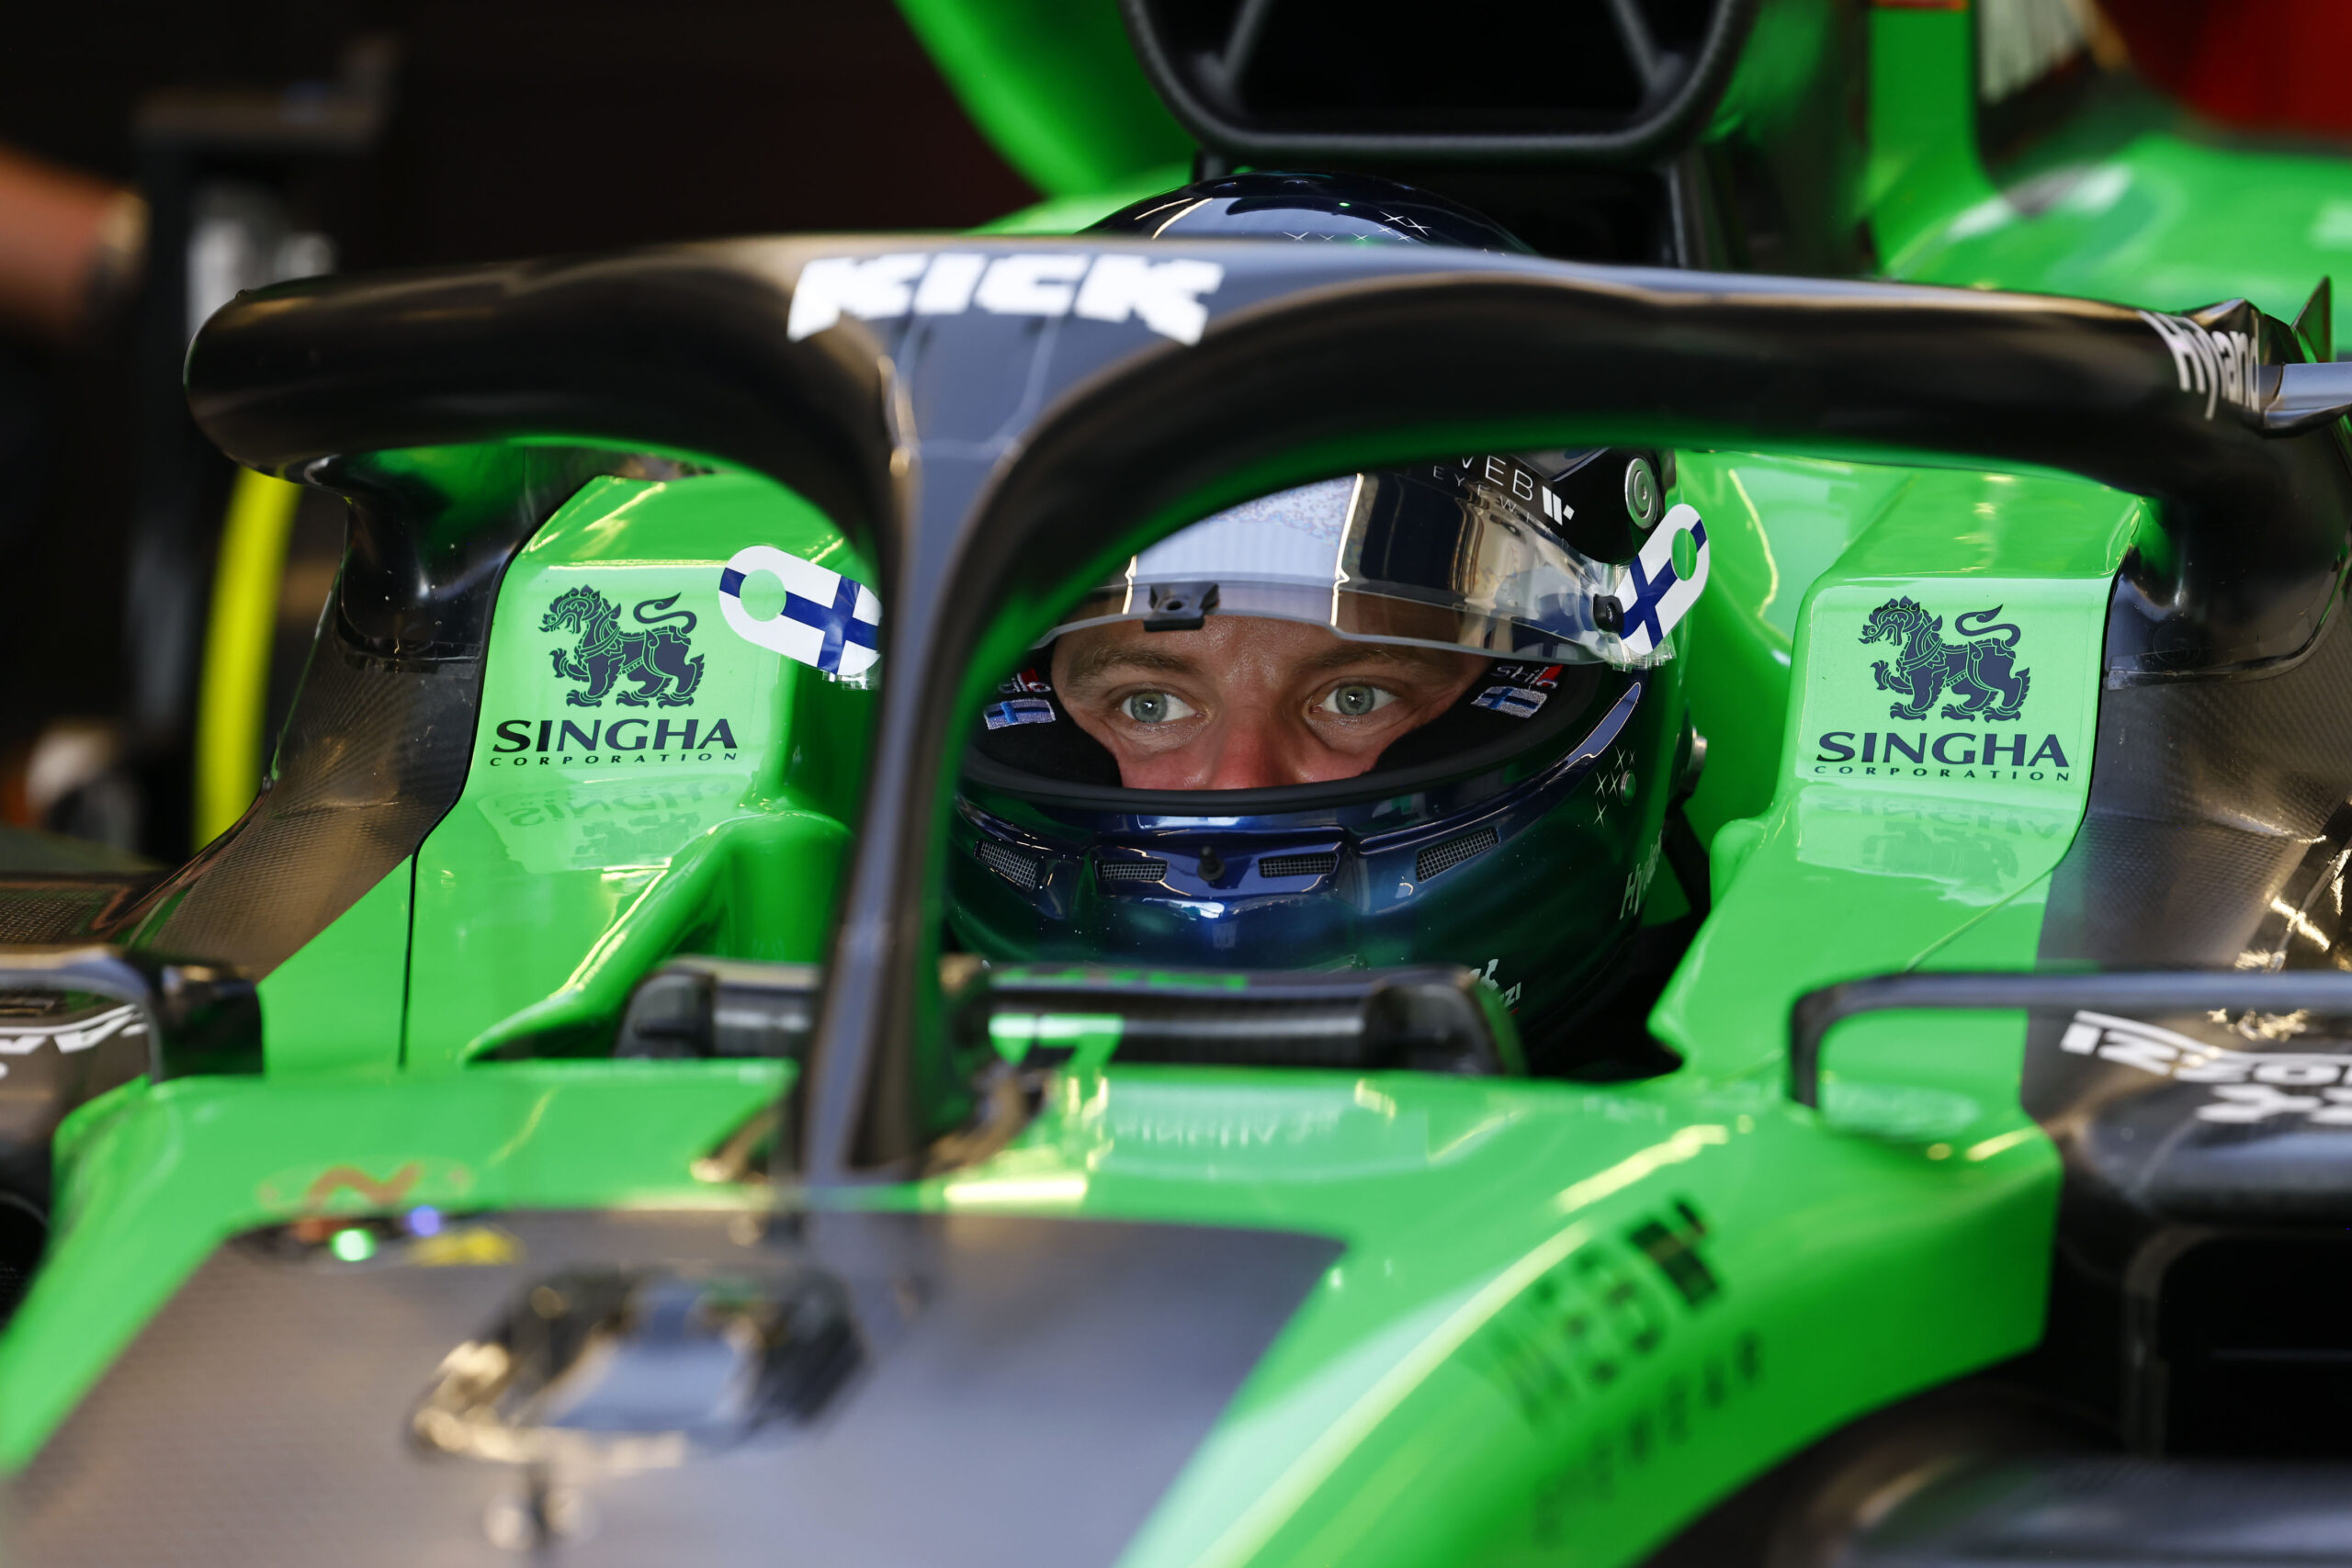 Valtteri Bottas in his Sauber F1 car with his helmet on